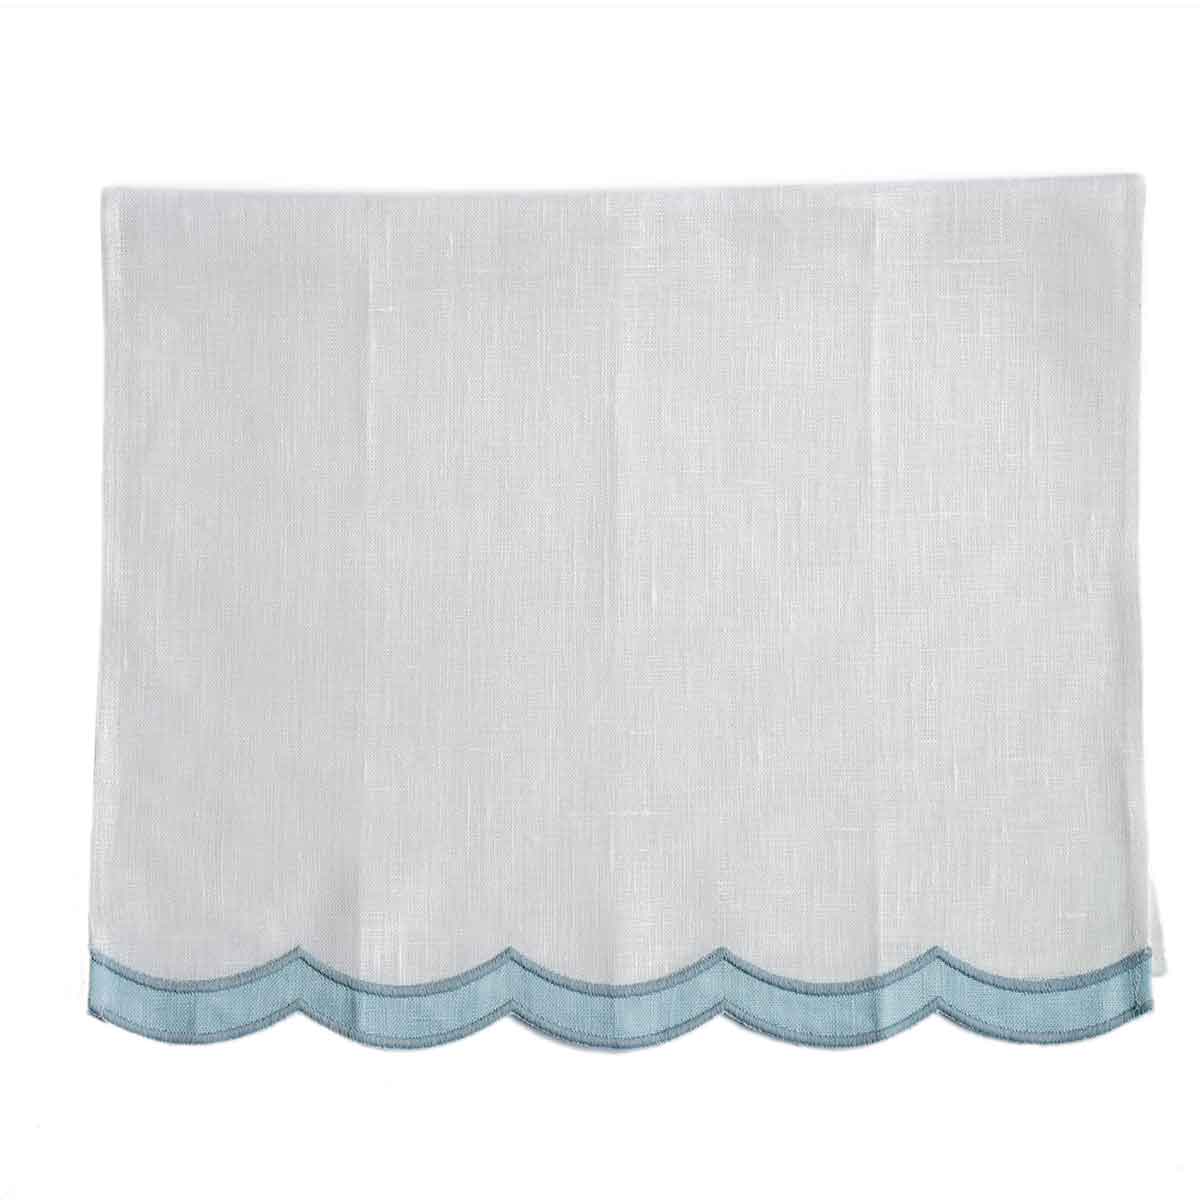 Fringe Benefits Guest Towel  Garden Folly Linen Hand Towels